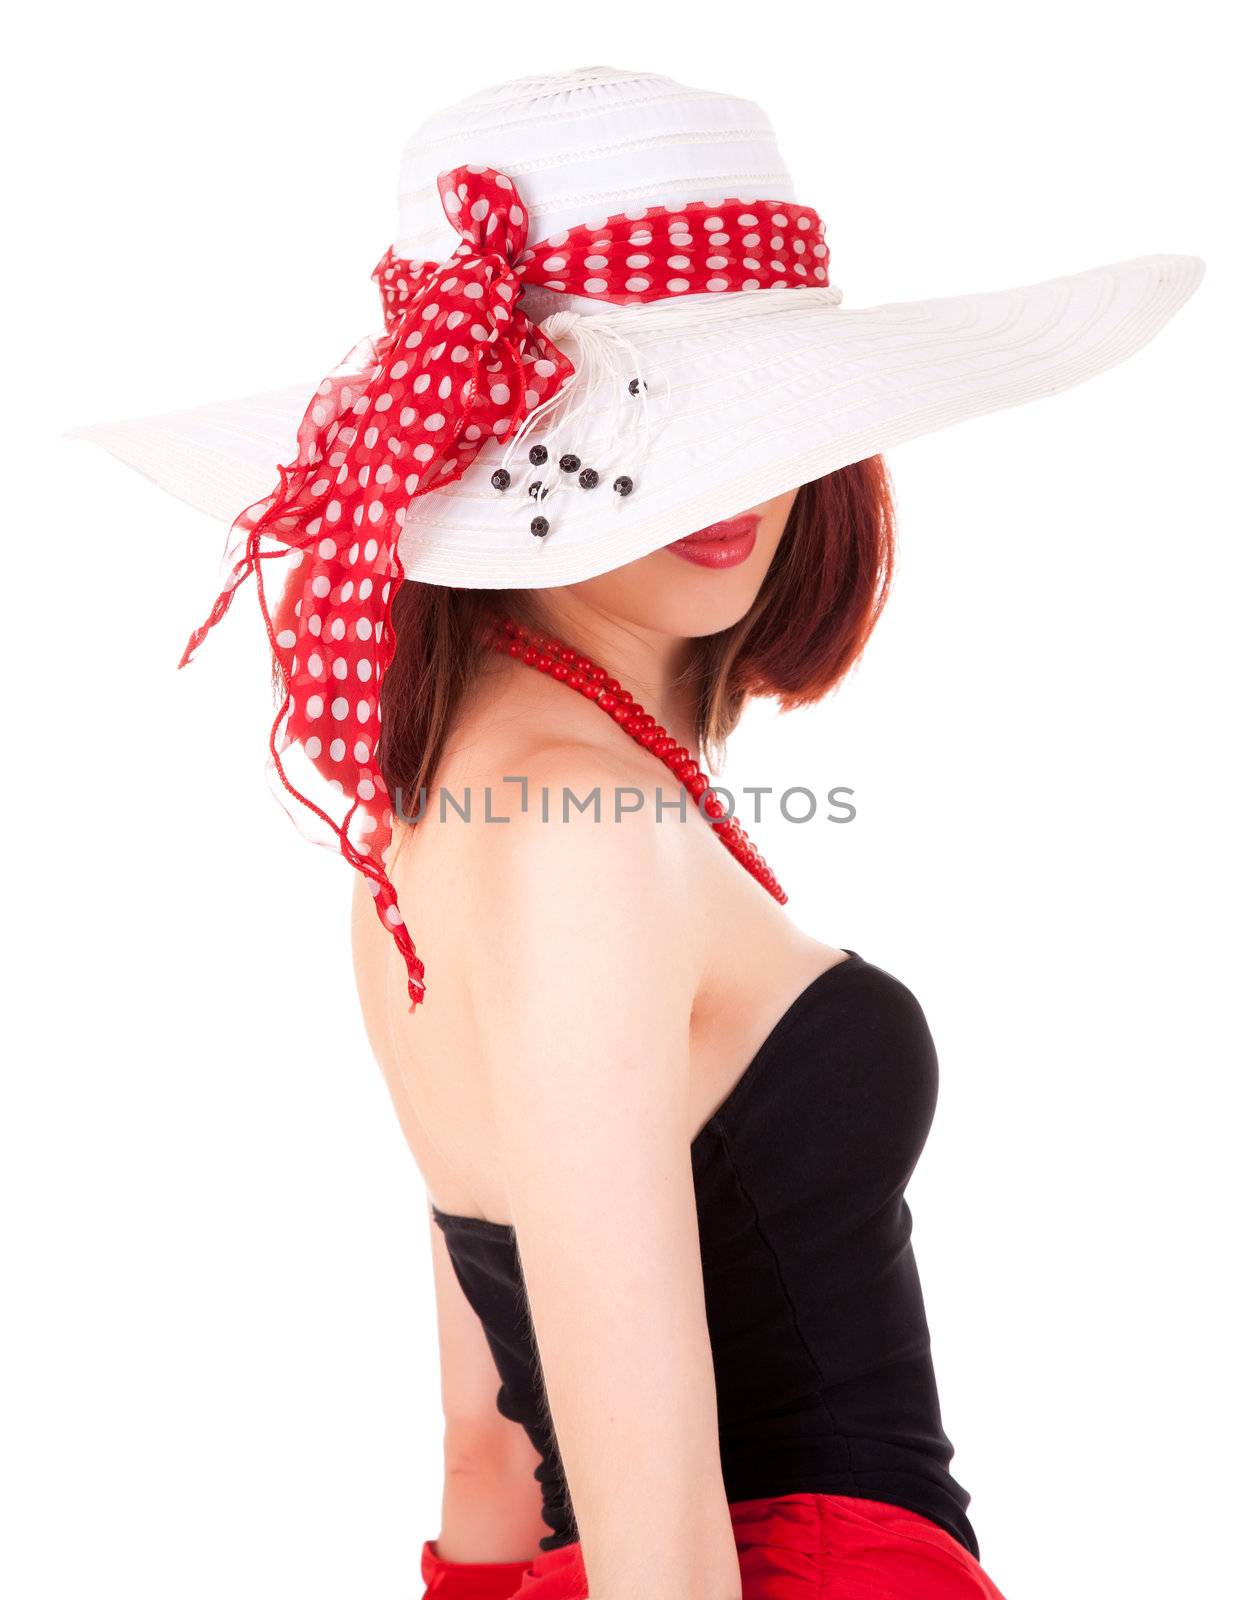 Fashion girl in retro style with big hat by iryna_rasko